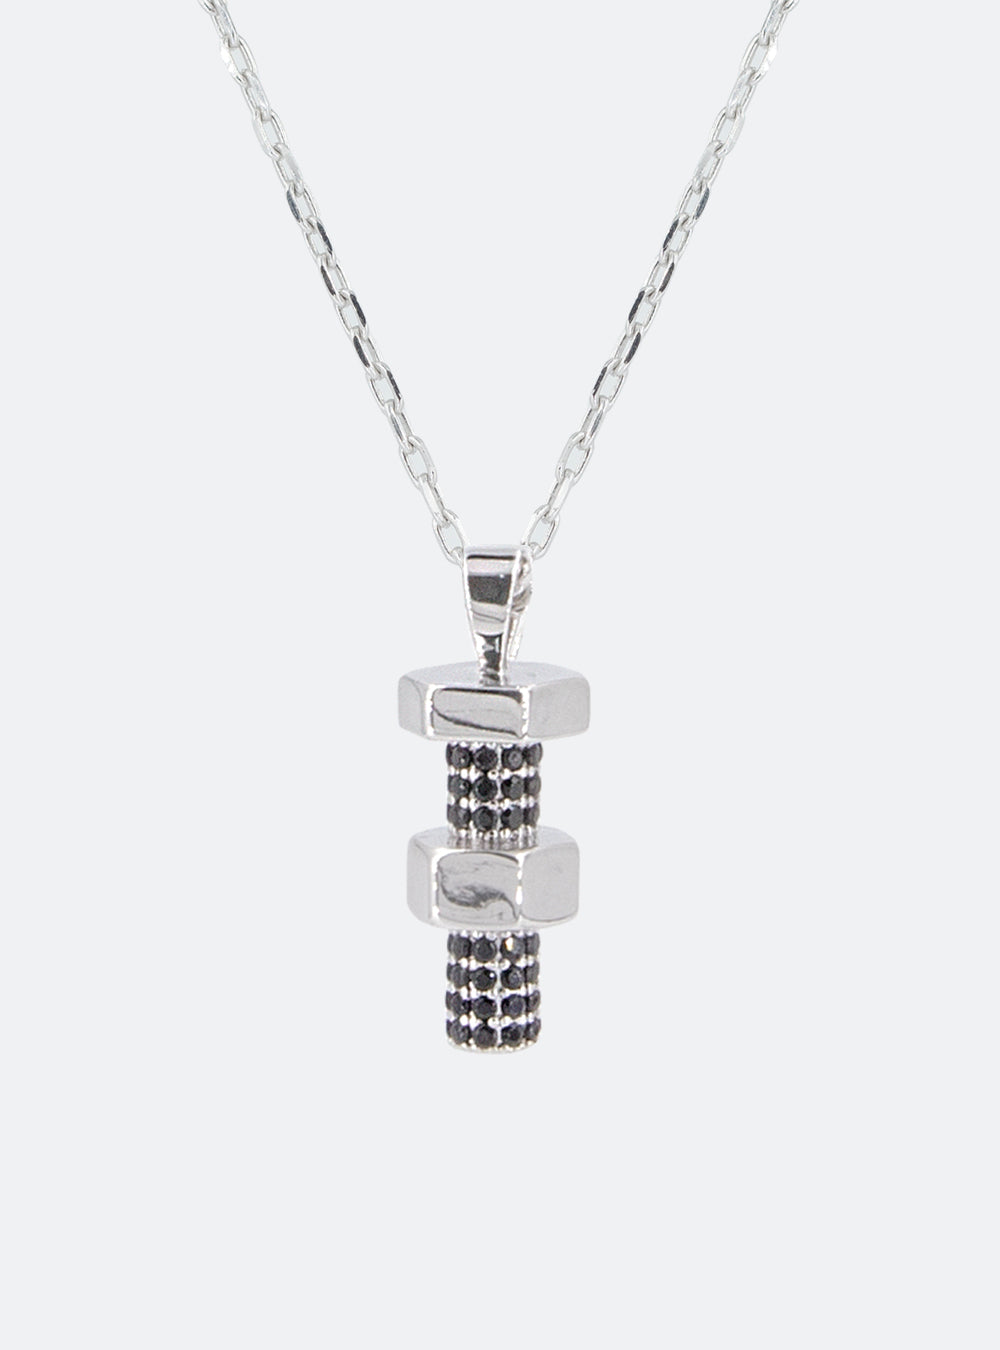 Hexbolt w/ cubic zirconia pendant necklace (Black)